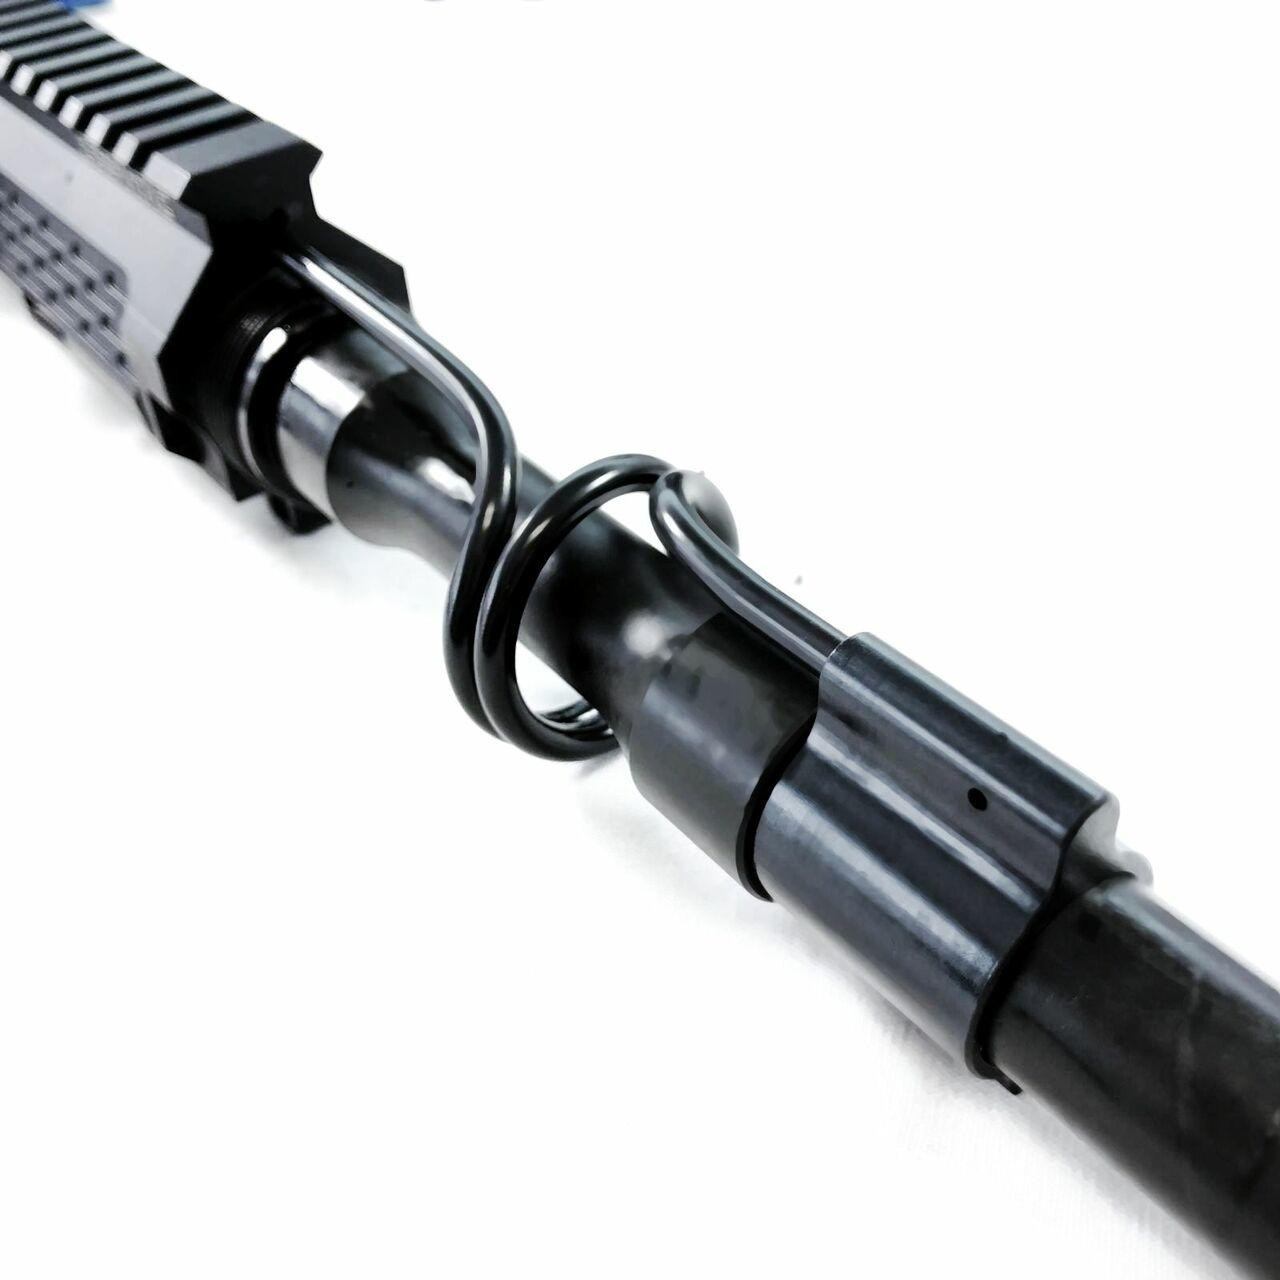 BLACK LABEL Pig Tail Gas Tube - Pistol Length FeBon Nitride or Pistol to Carbine Converter